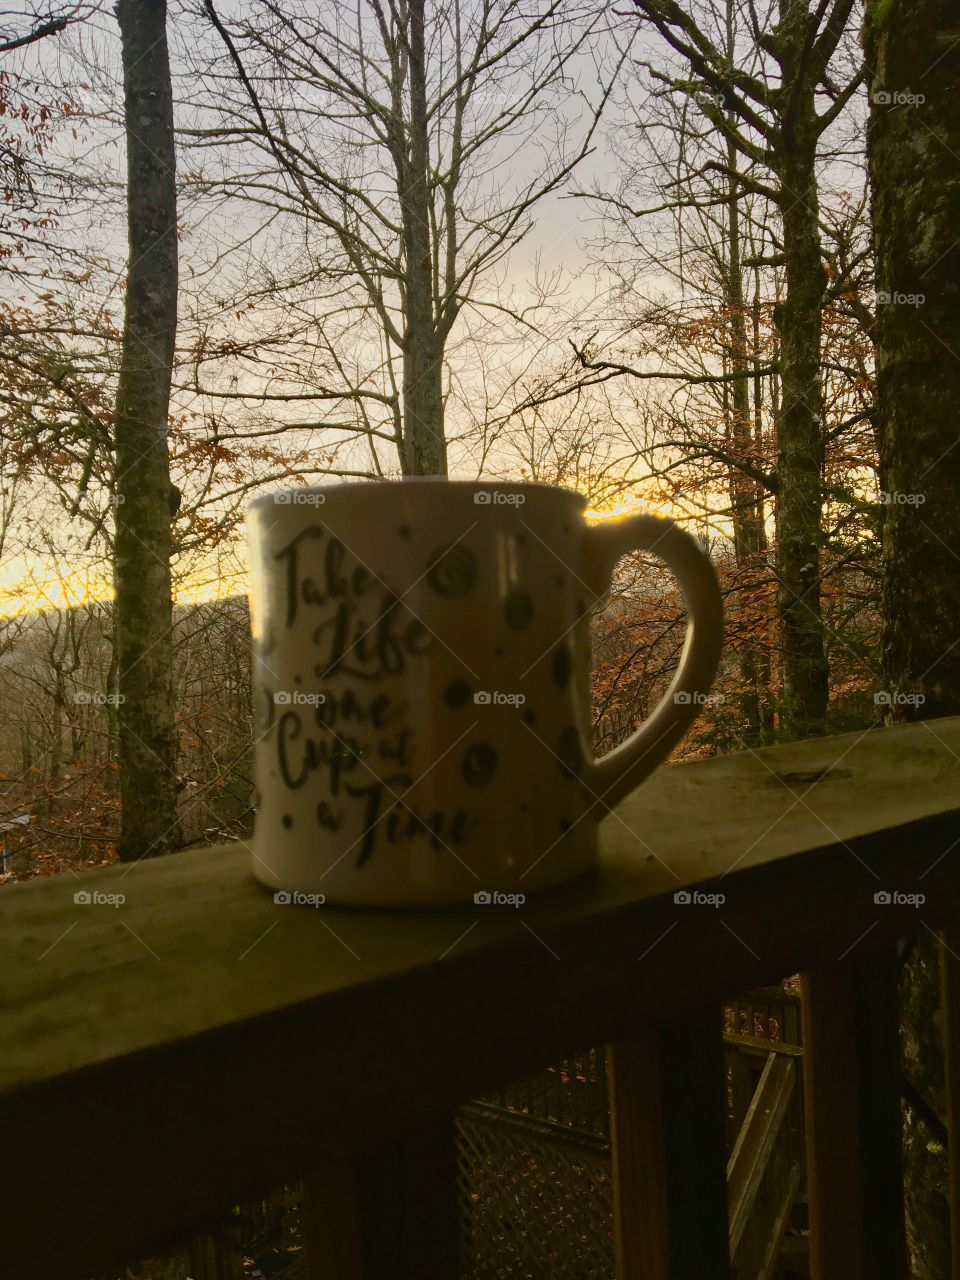 Coffee cup sunrise 